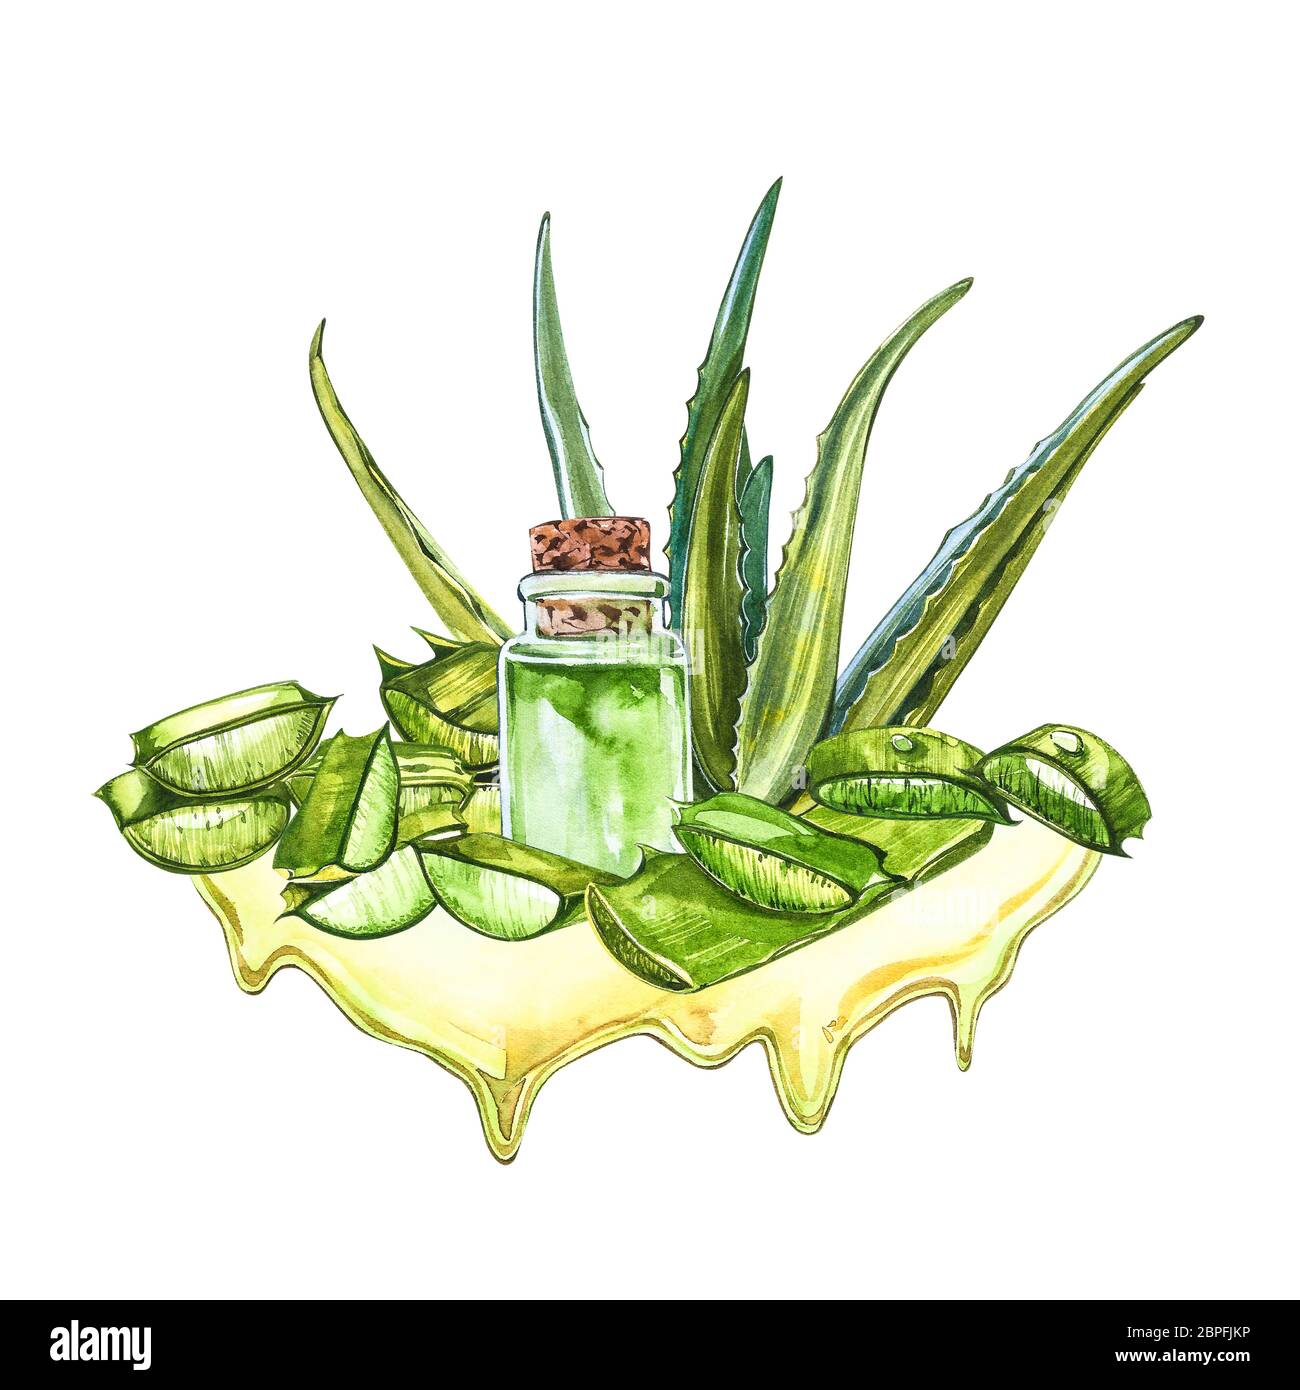 ArtStation - Botanical Illustration: Aloe Vera